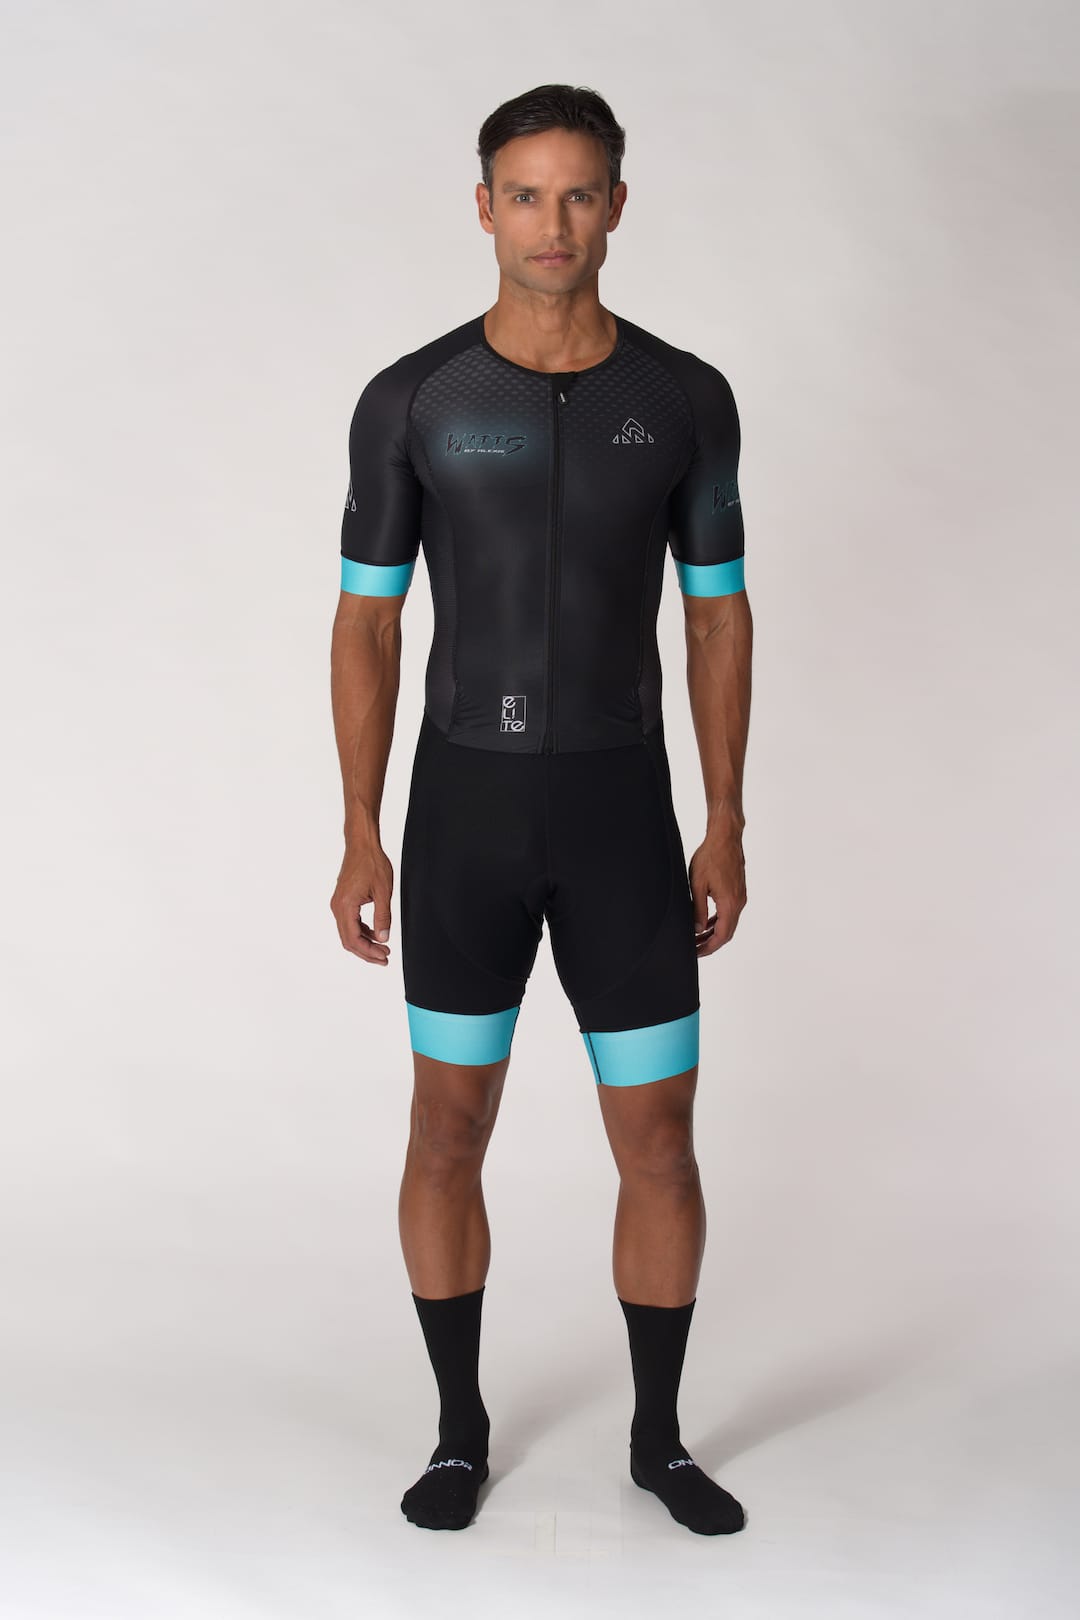 custom made cycling skinsuit